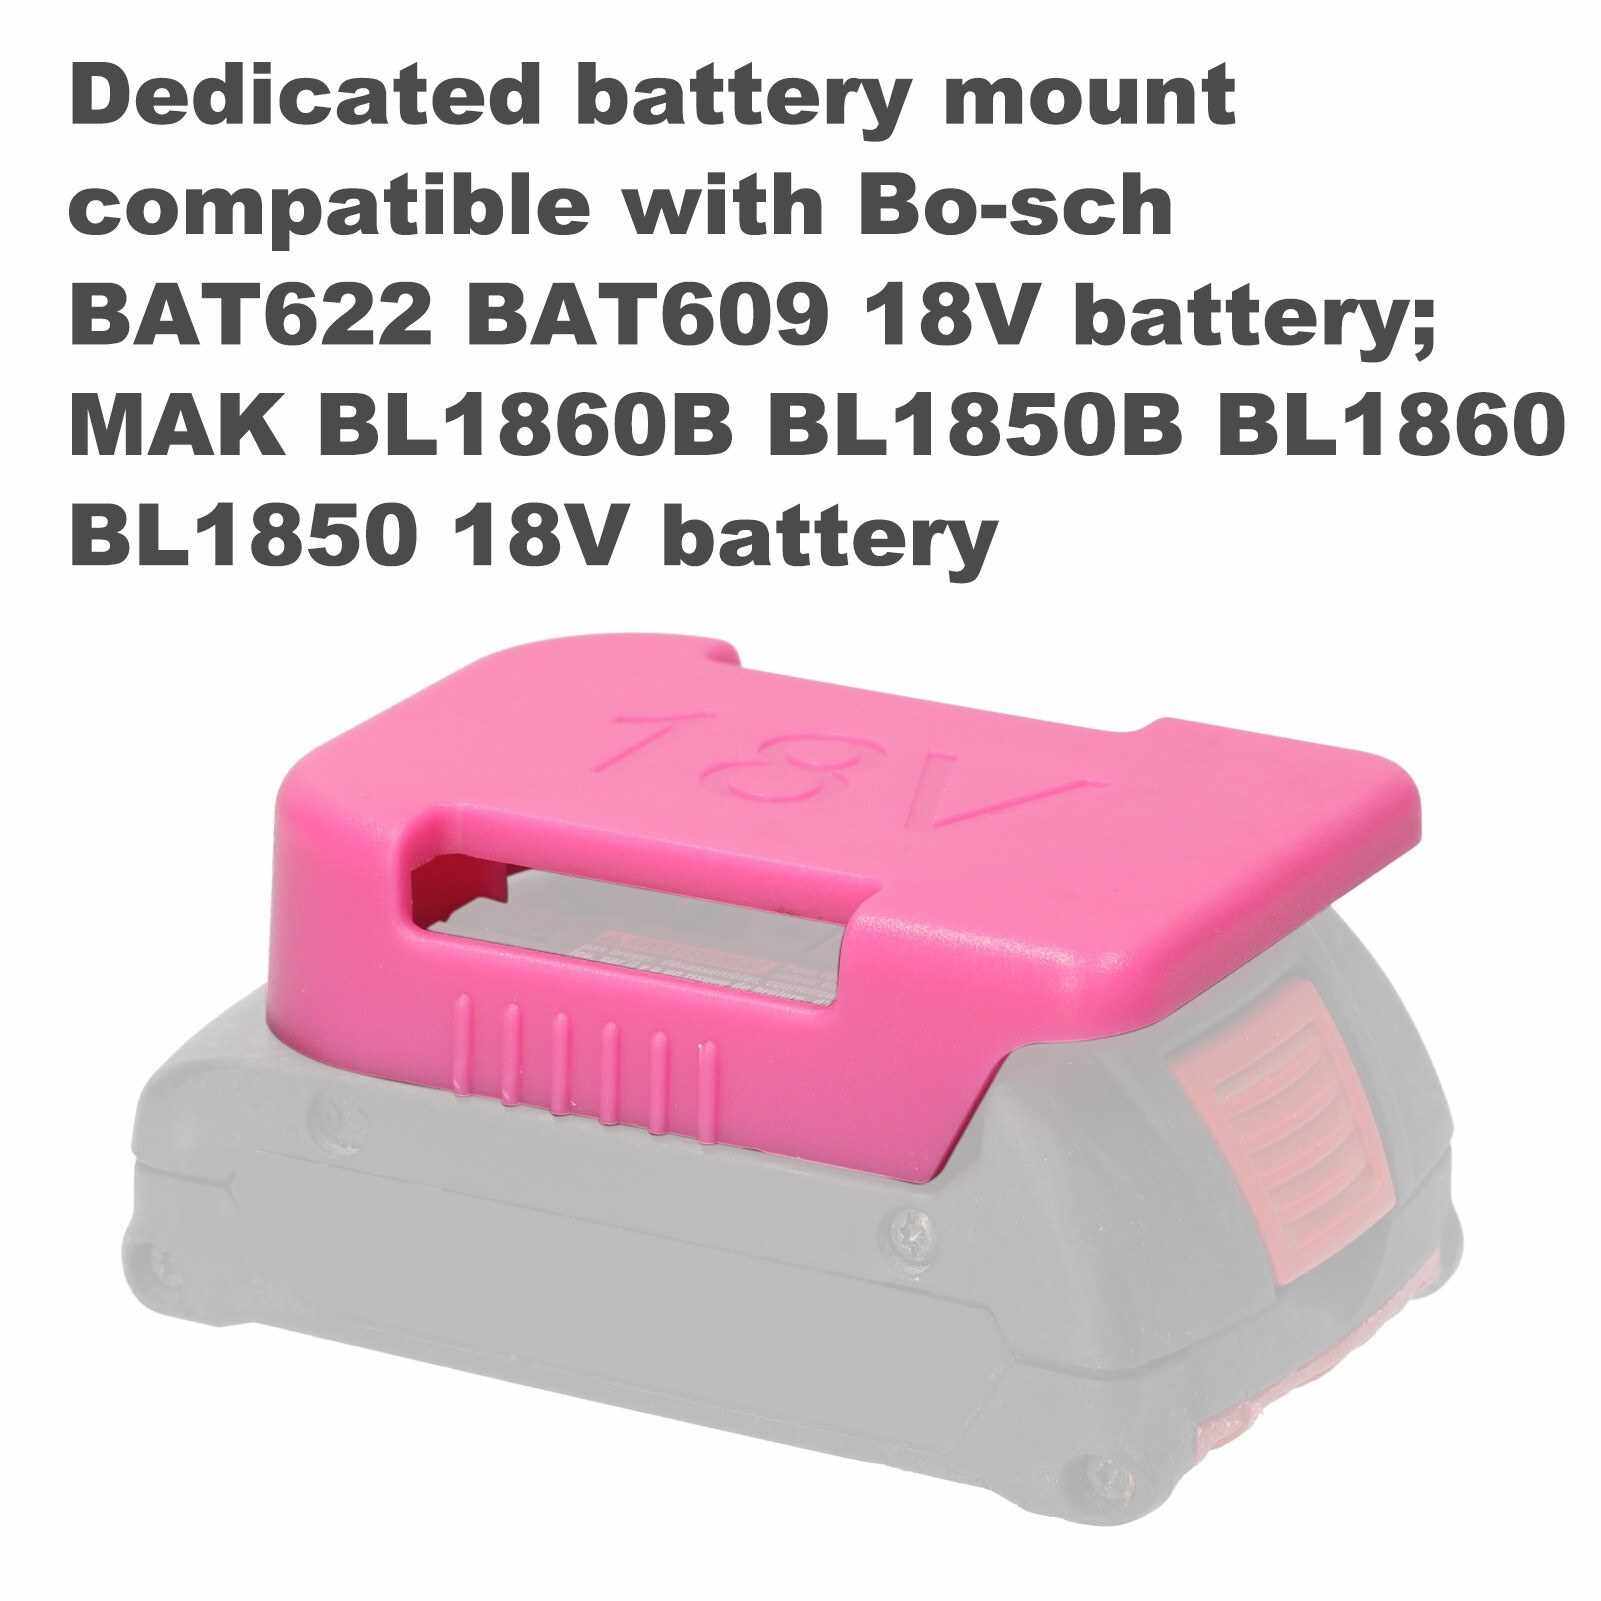 5pcs Lithium-Ion Batteries Storage Bracket Dedicated Battery Clip Battery Mount Dock Holder Replacement for Bo-sch BAT622 BAT609 18V Battery MAK BL1860B BL1850B BL1860 BL1850 18V Battery (Pink)